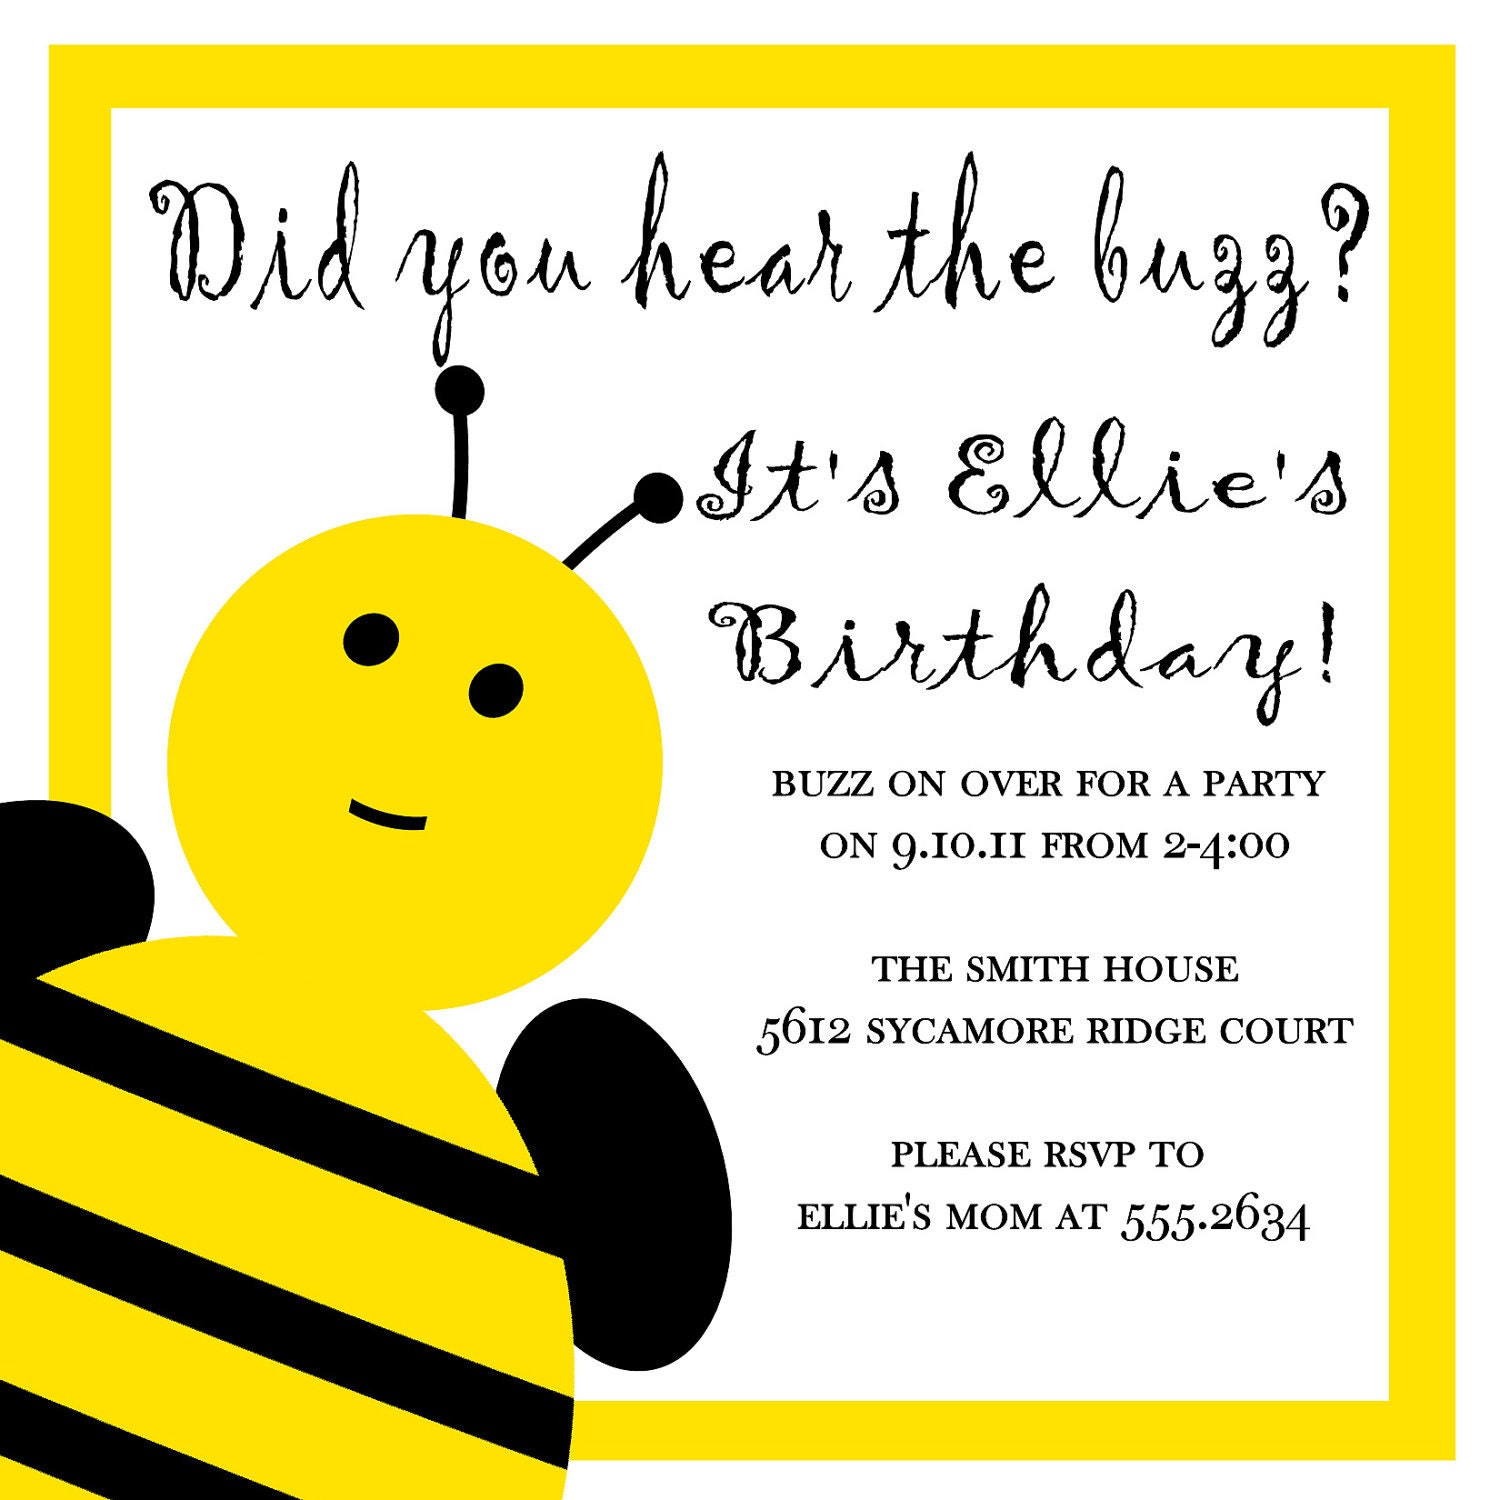 Have you heard the buzz bee invitation